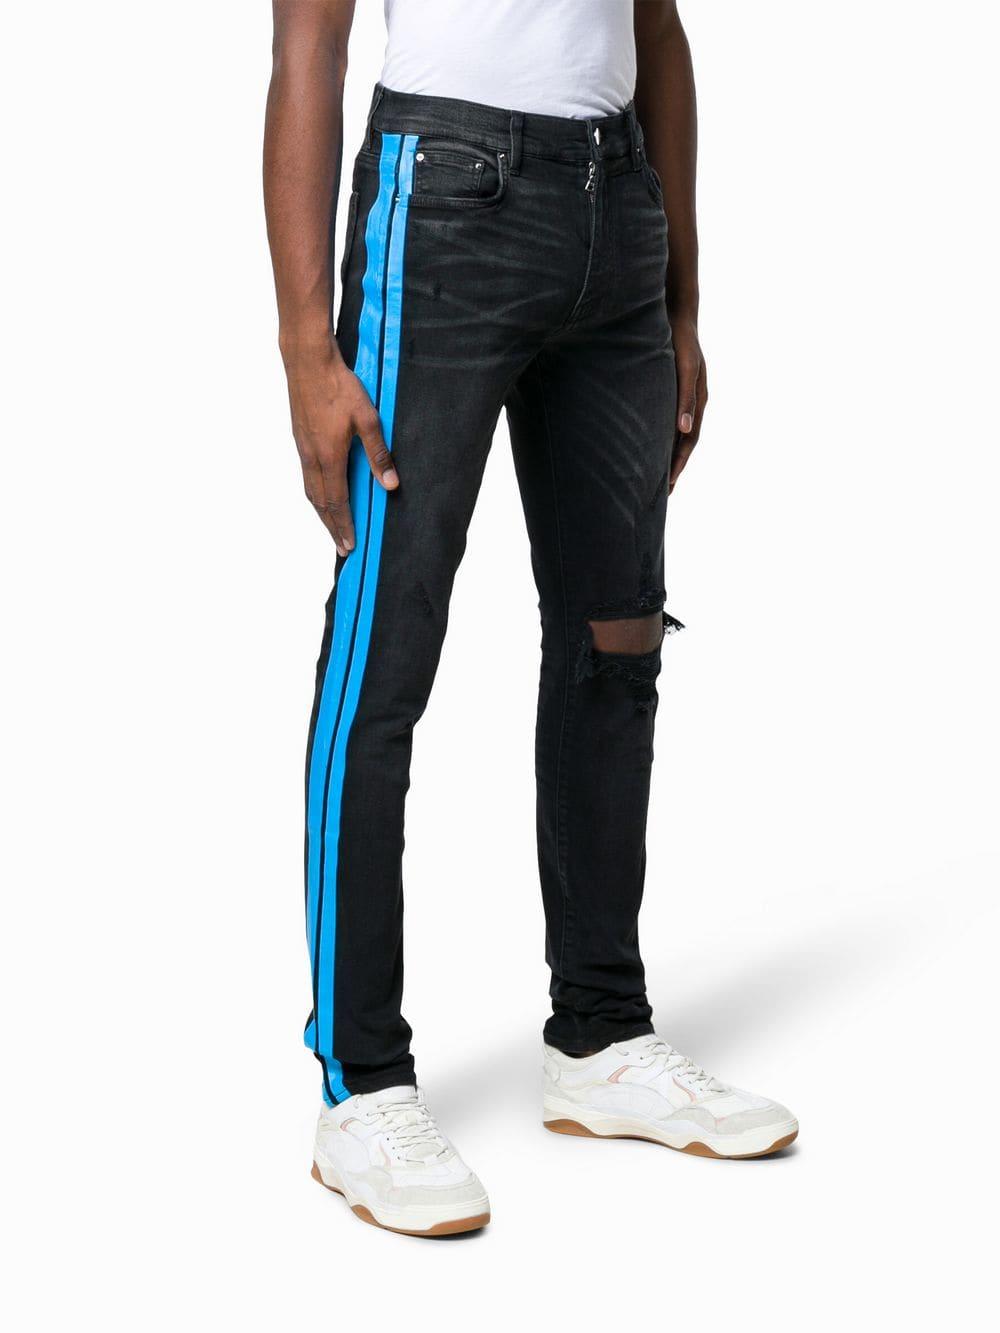 black jeans with stripe